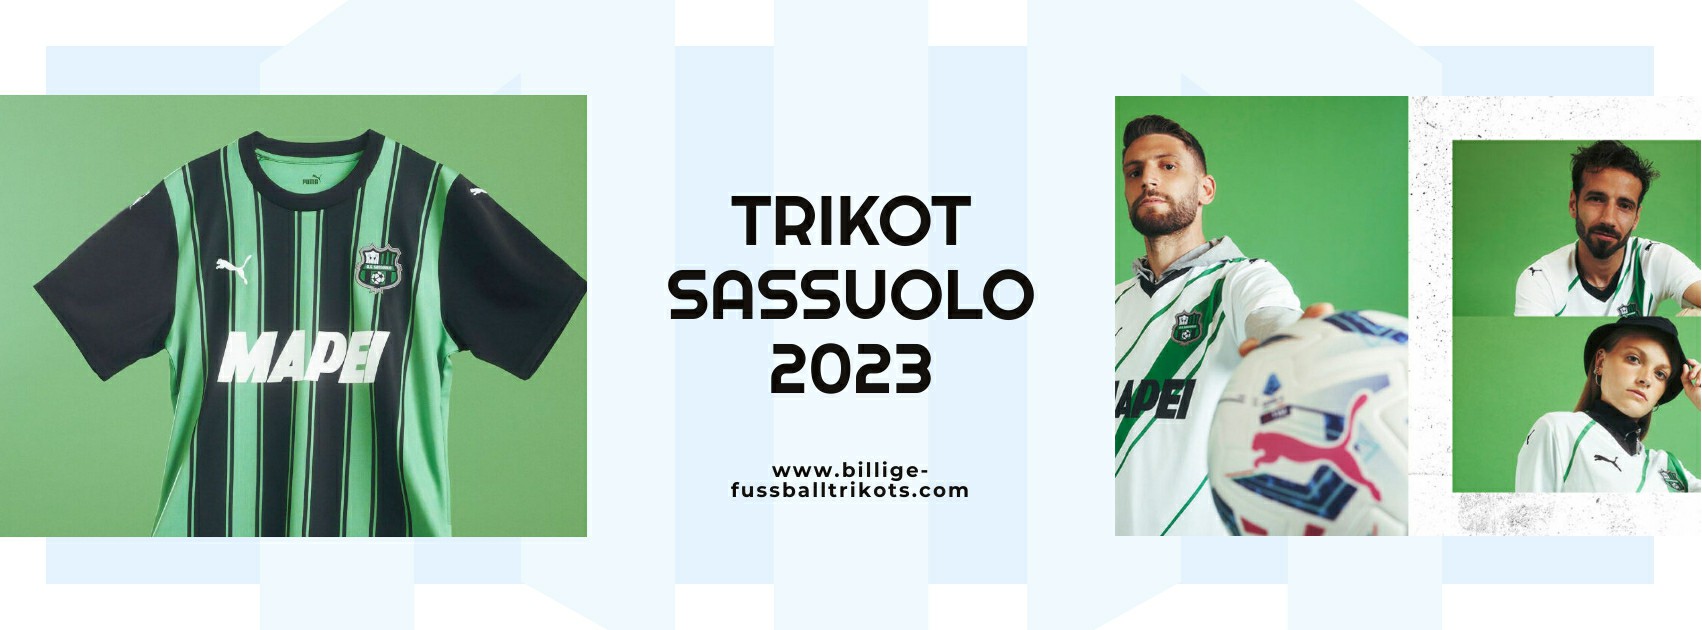 Sassuolo Trikot 2023-2024